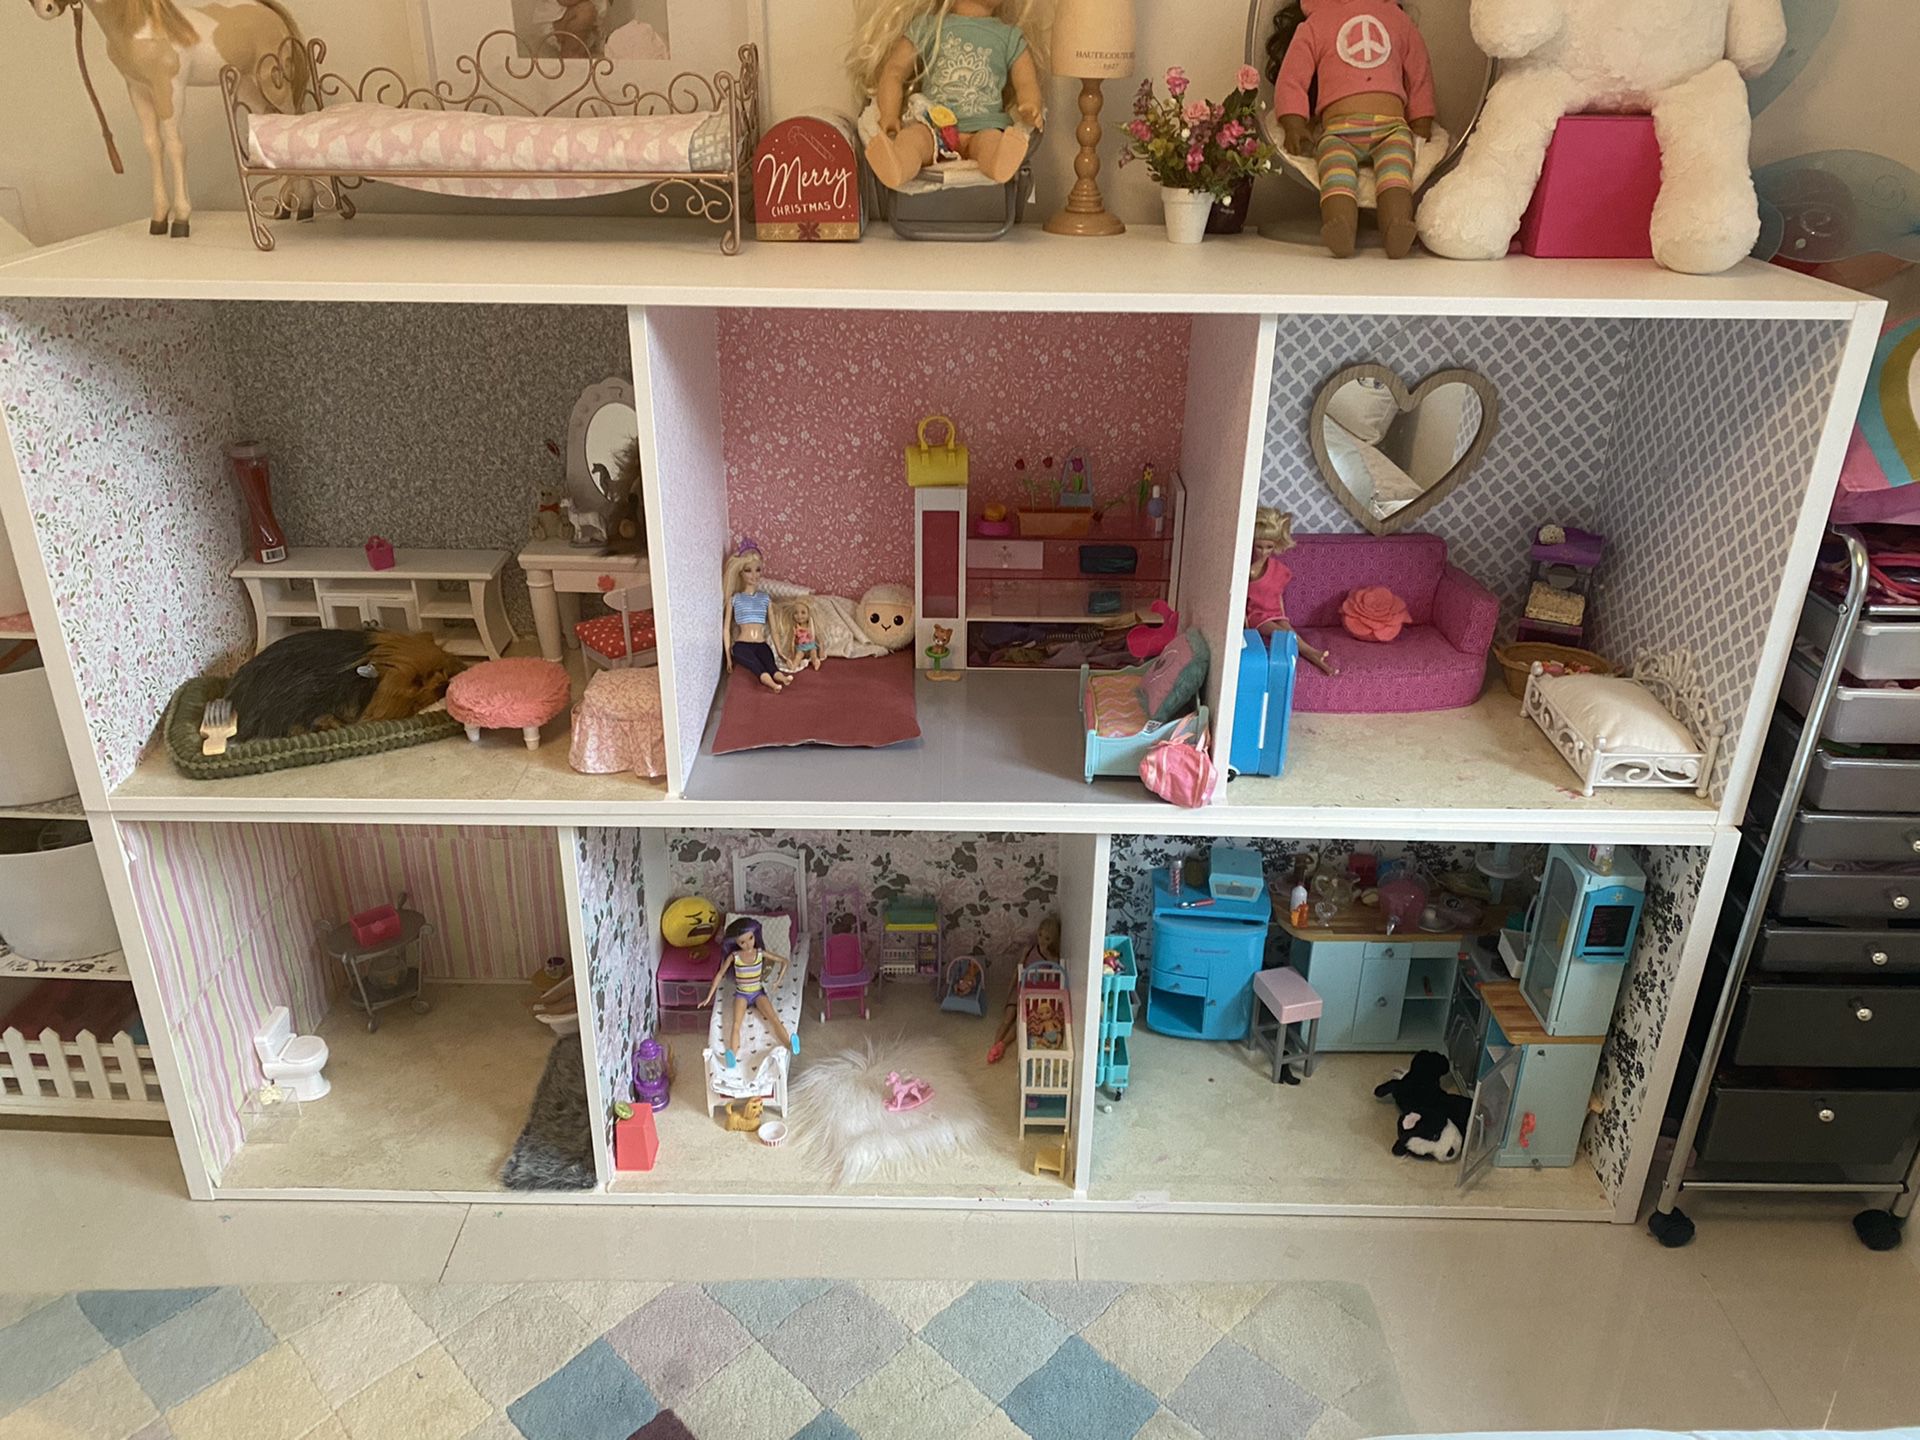 American Girl, Barbie doll house for sale, ikea furniture